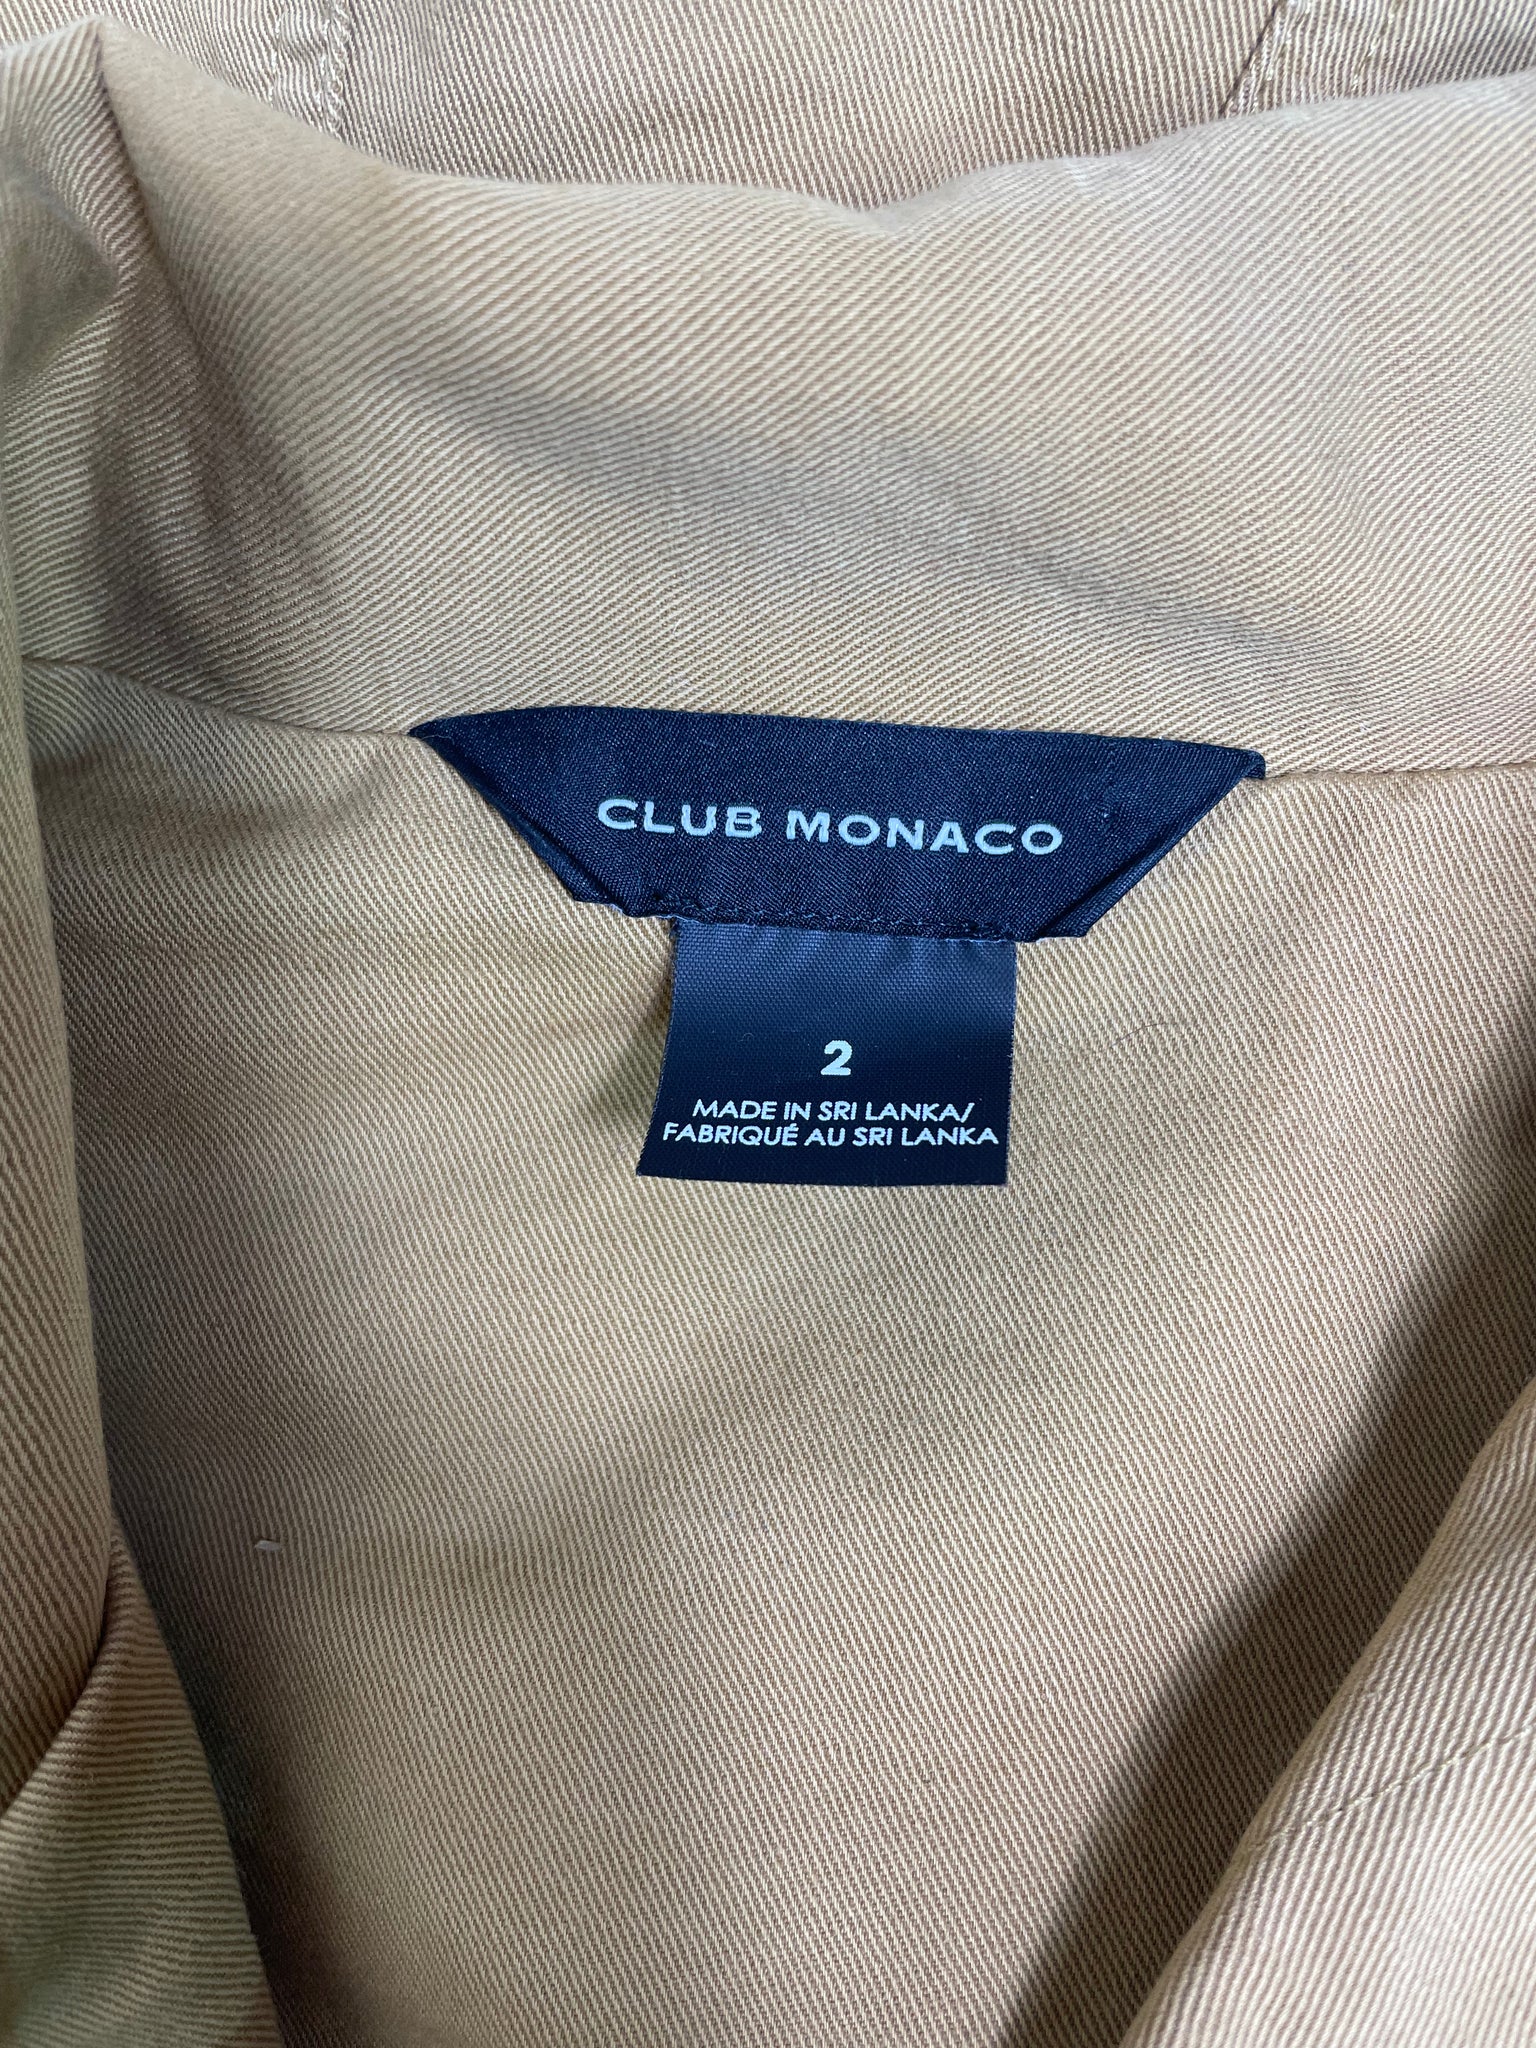 Club Monaco utility romper, Size 2